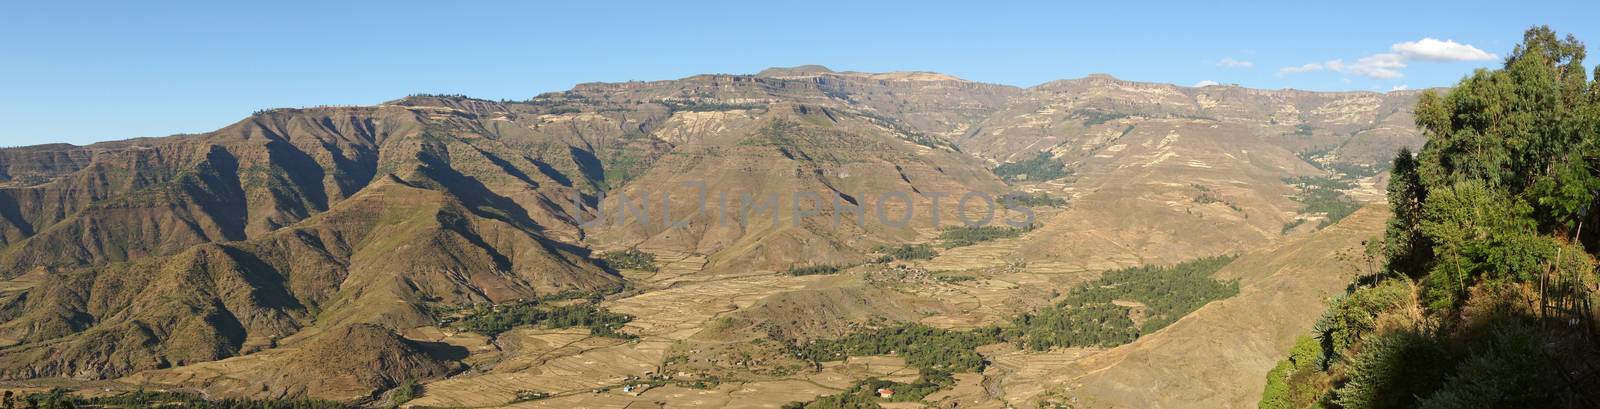 Landscape, Amhara, Ethiopia, Africa by alfotokunst